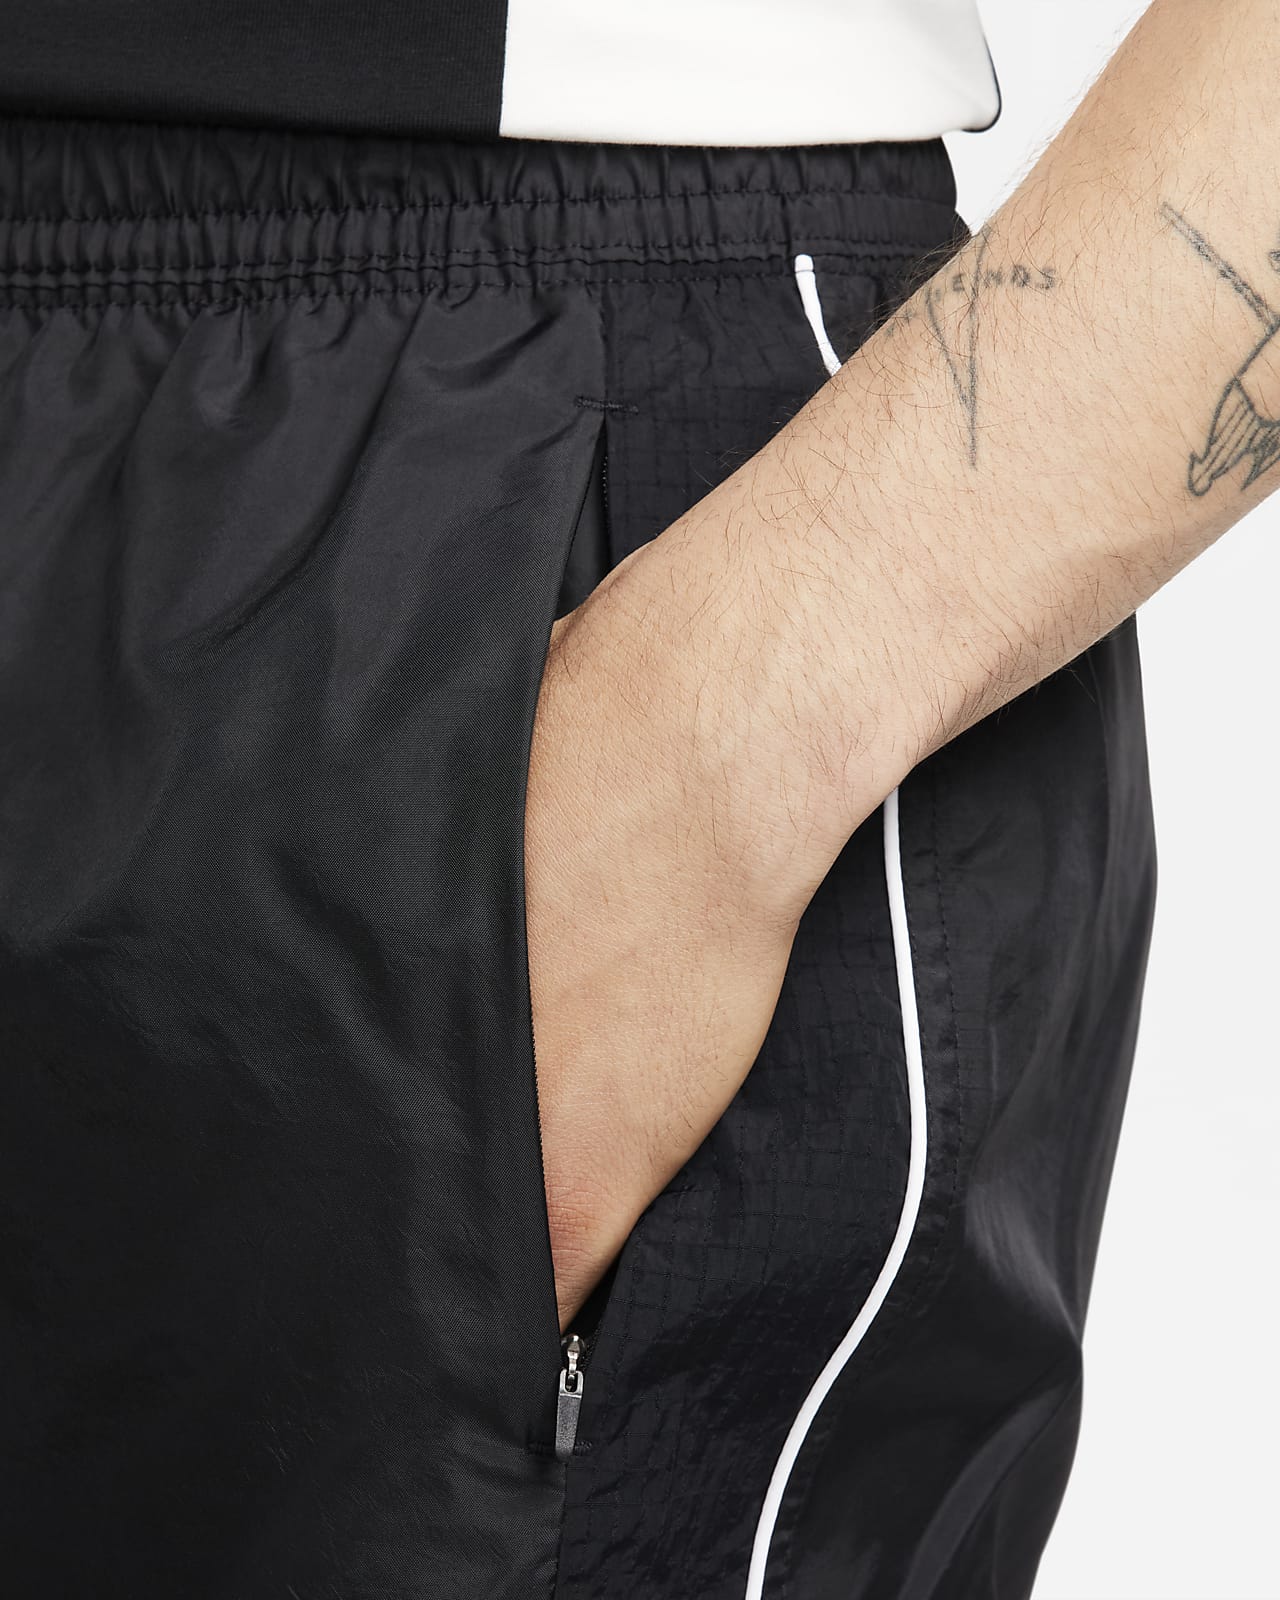 Polyester/Nylon Nike Track pant